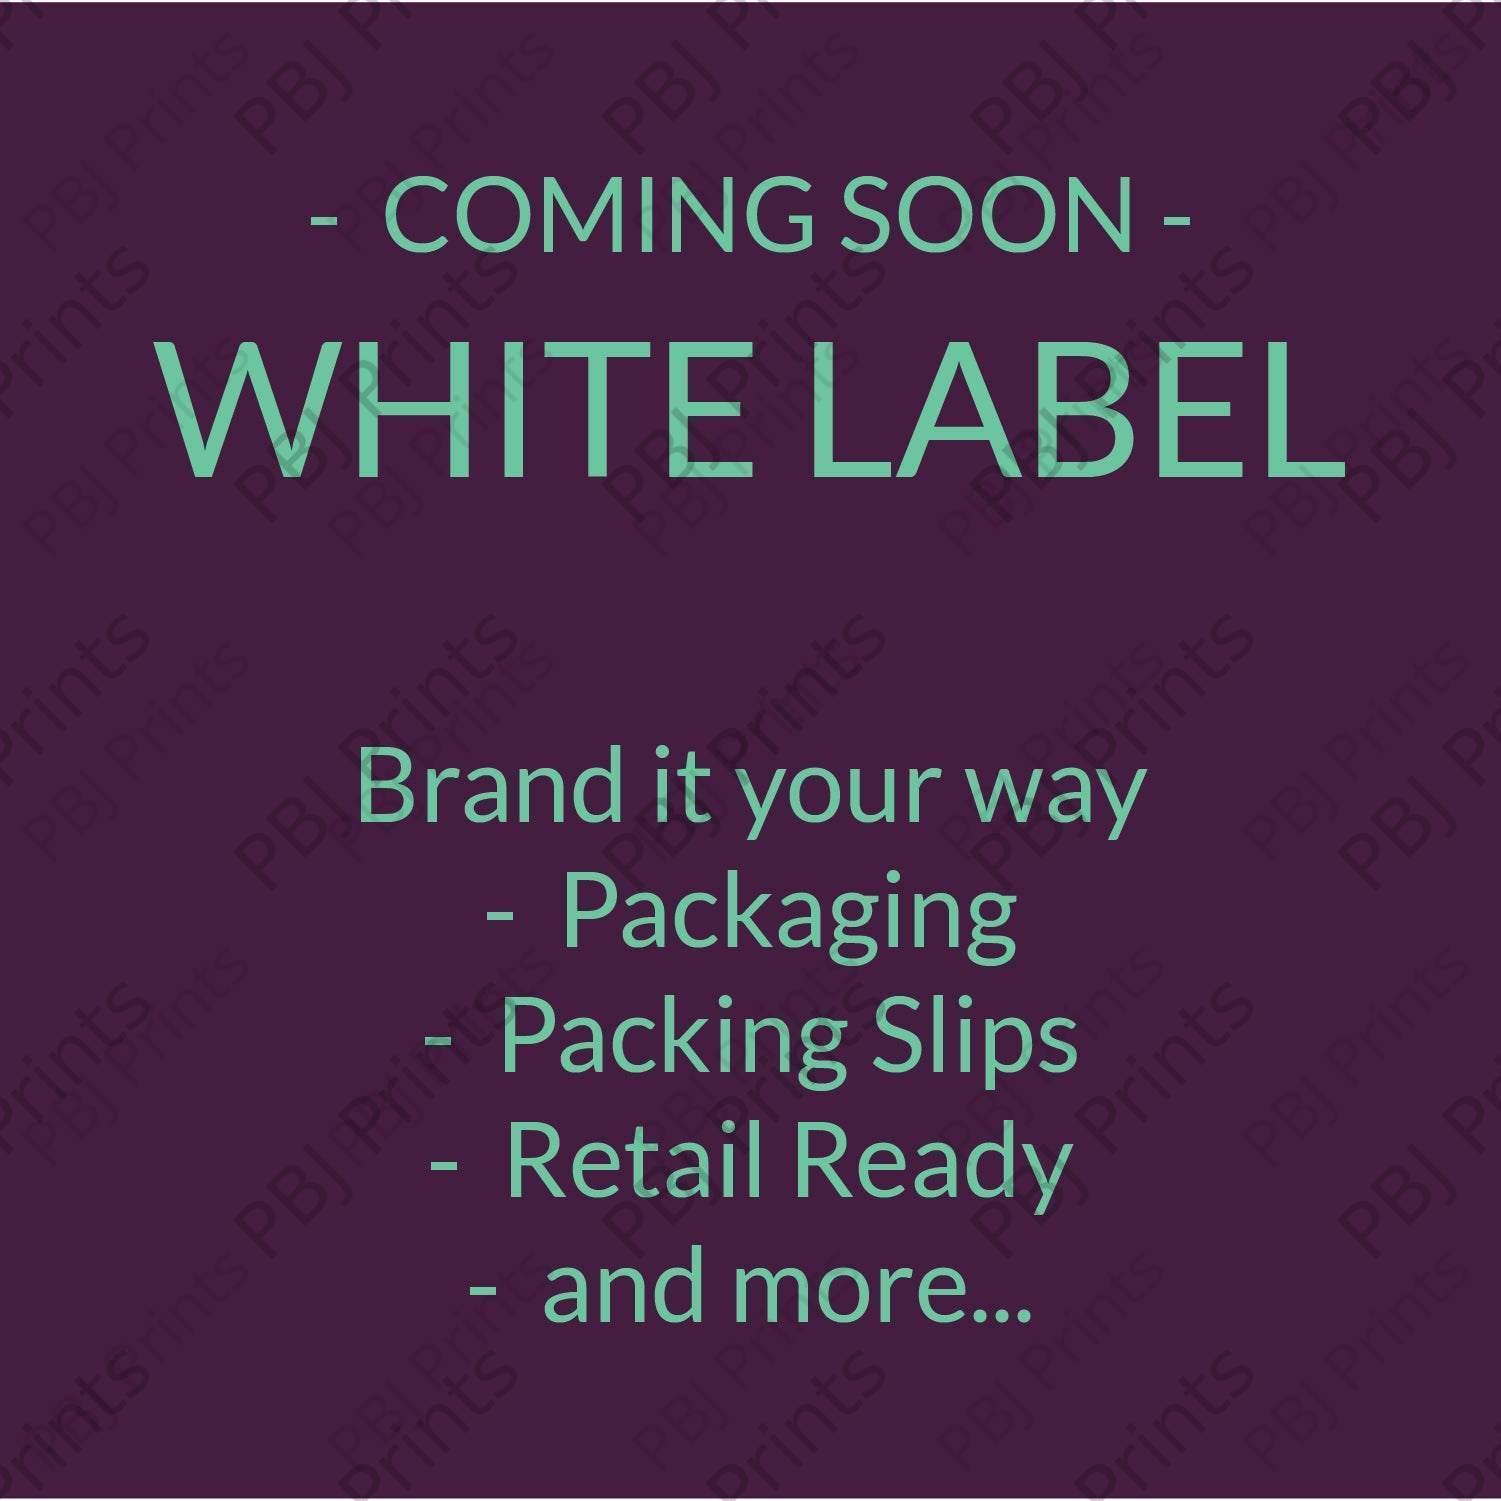 White Label - COMING SOON -  by PBJ Prints - 